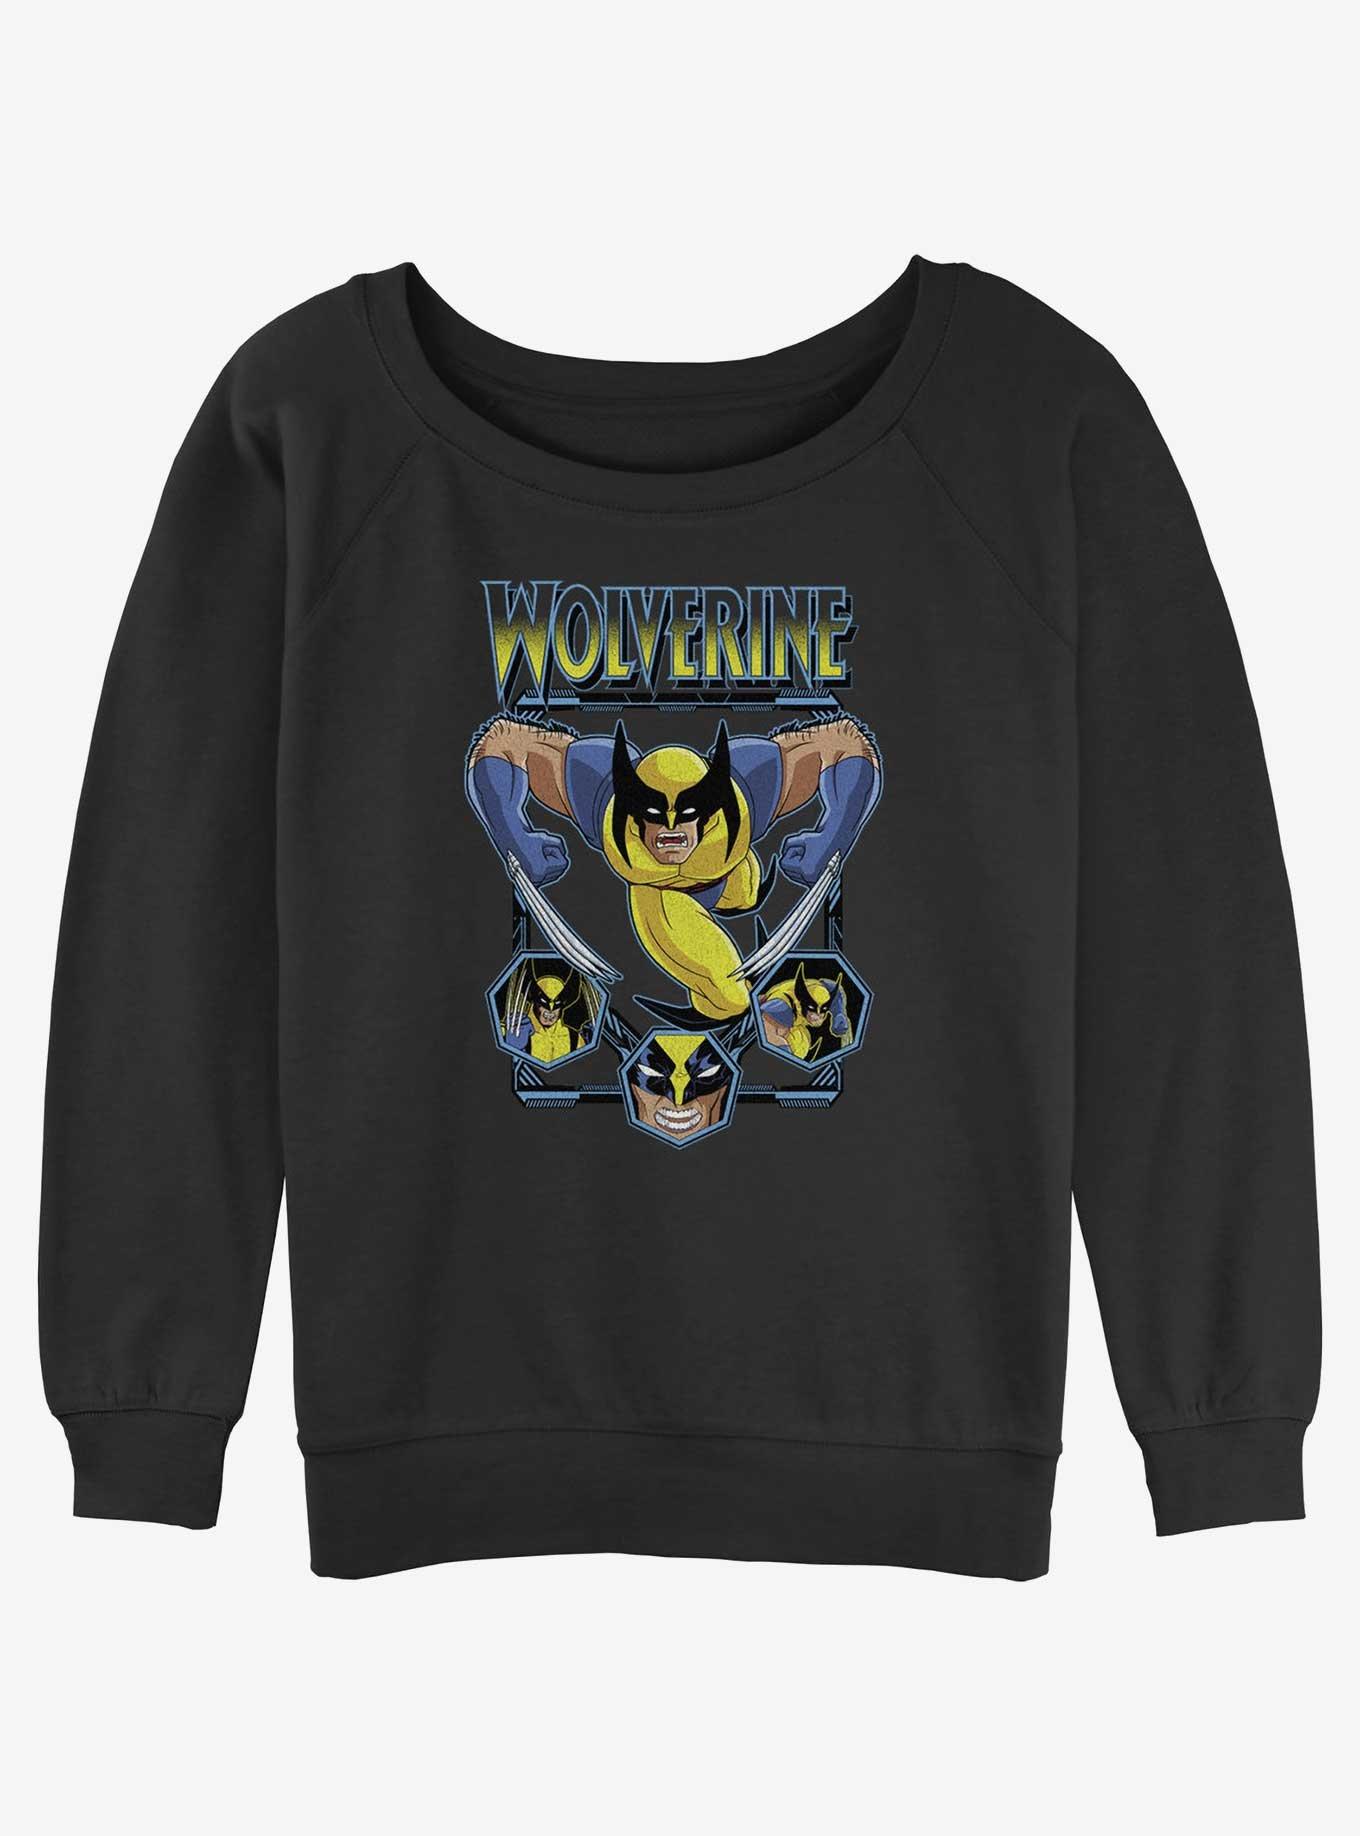 Wolverine Animated Attack Girls Slouchy Sweatshirt, BLACK, hi-res